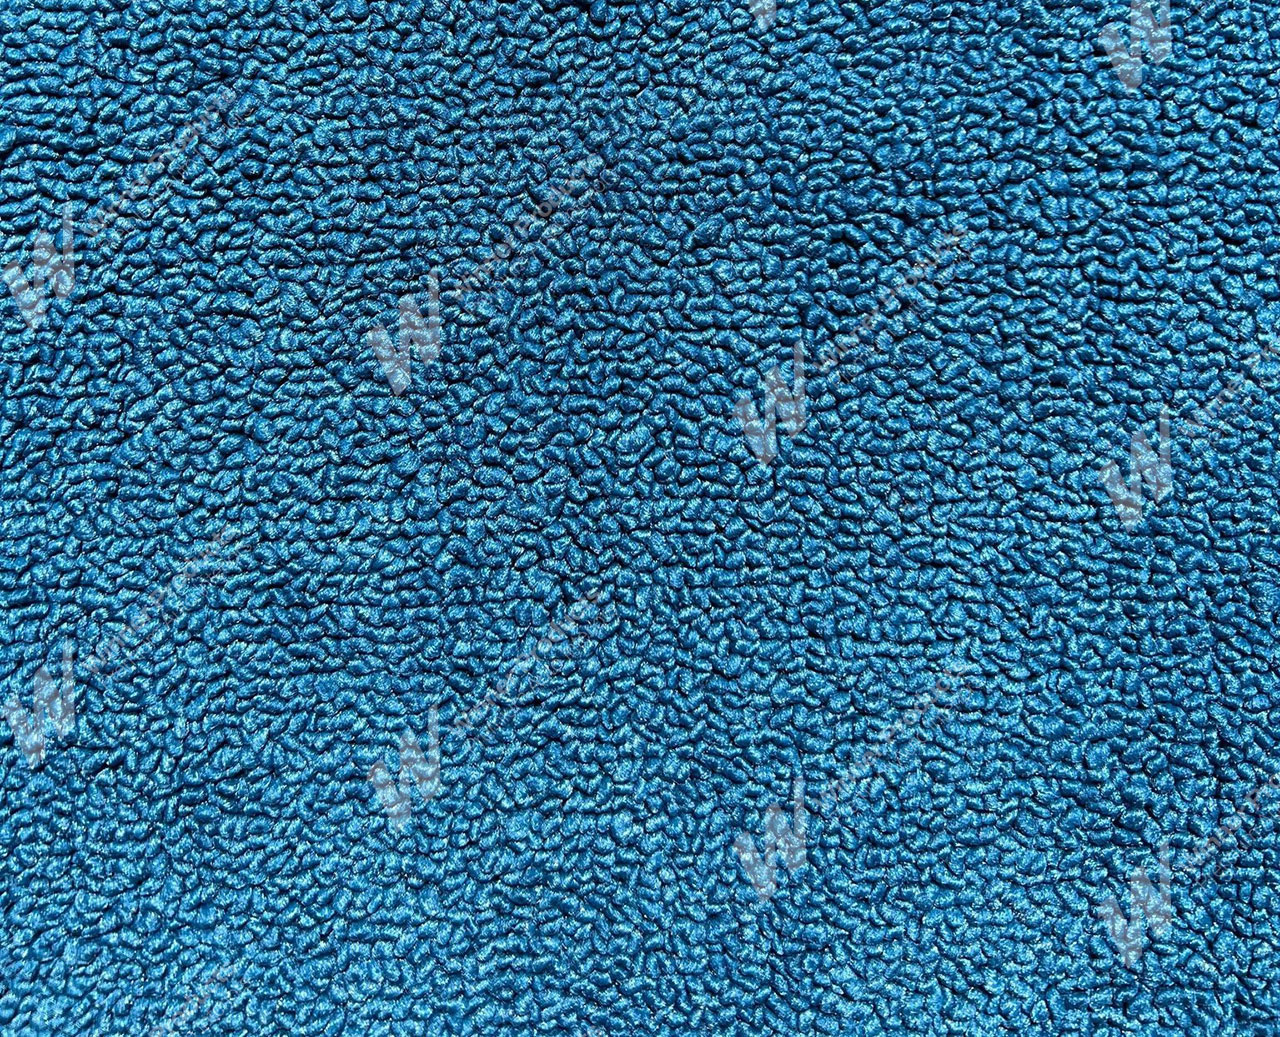 Holden Premier HZ Premier Sedan 23C Light Blue & Cloth Carpet (Image 1 of 1)